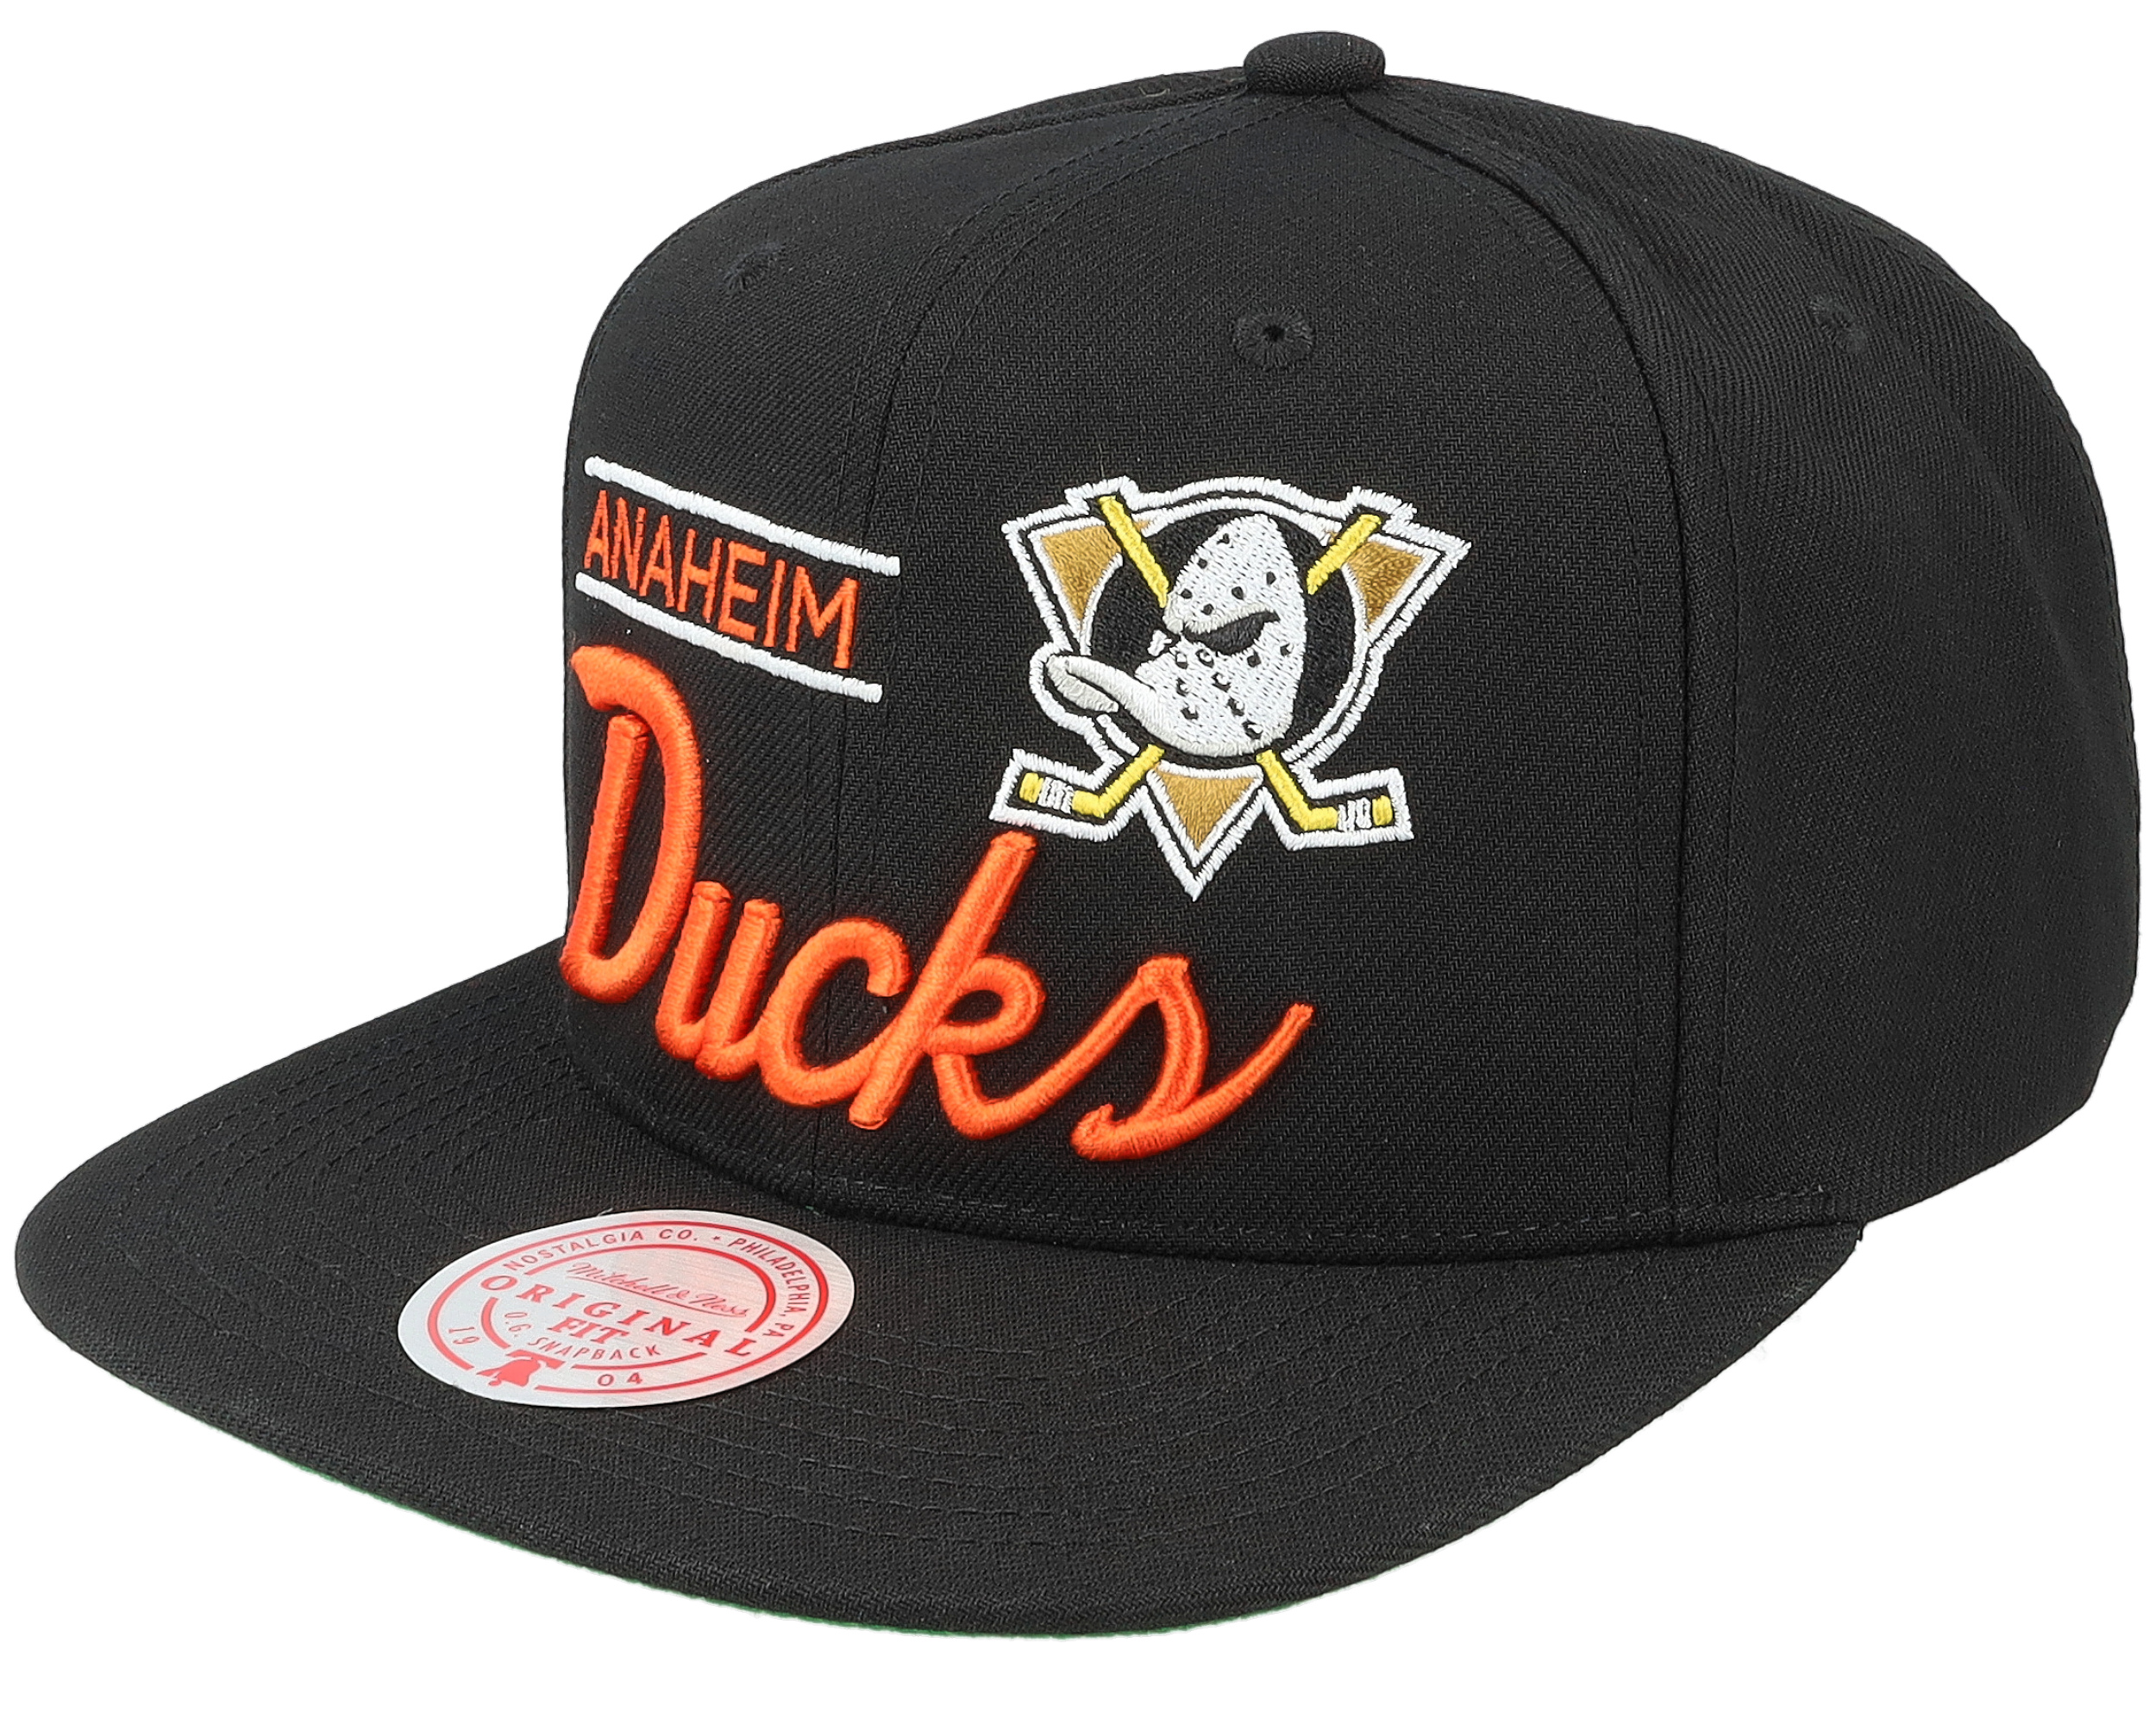 Mitchell & Ness - NHL Black Snapback Cap - Anaheim Ducks Vintage Paintbrush Black Snapback @ Hatstore